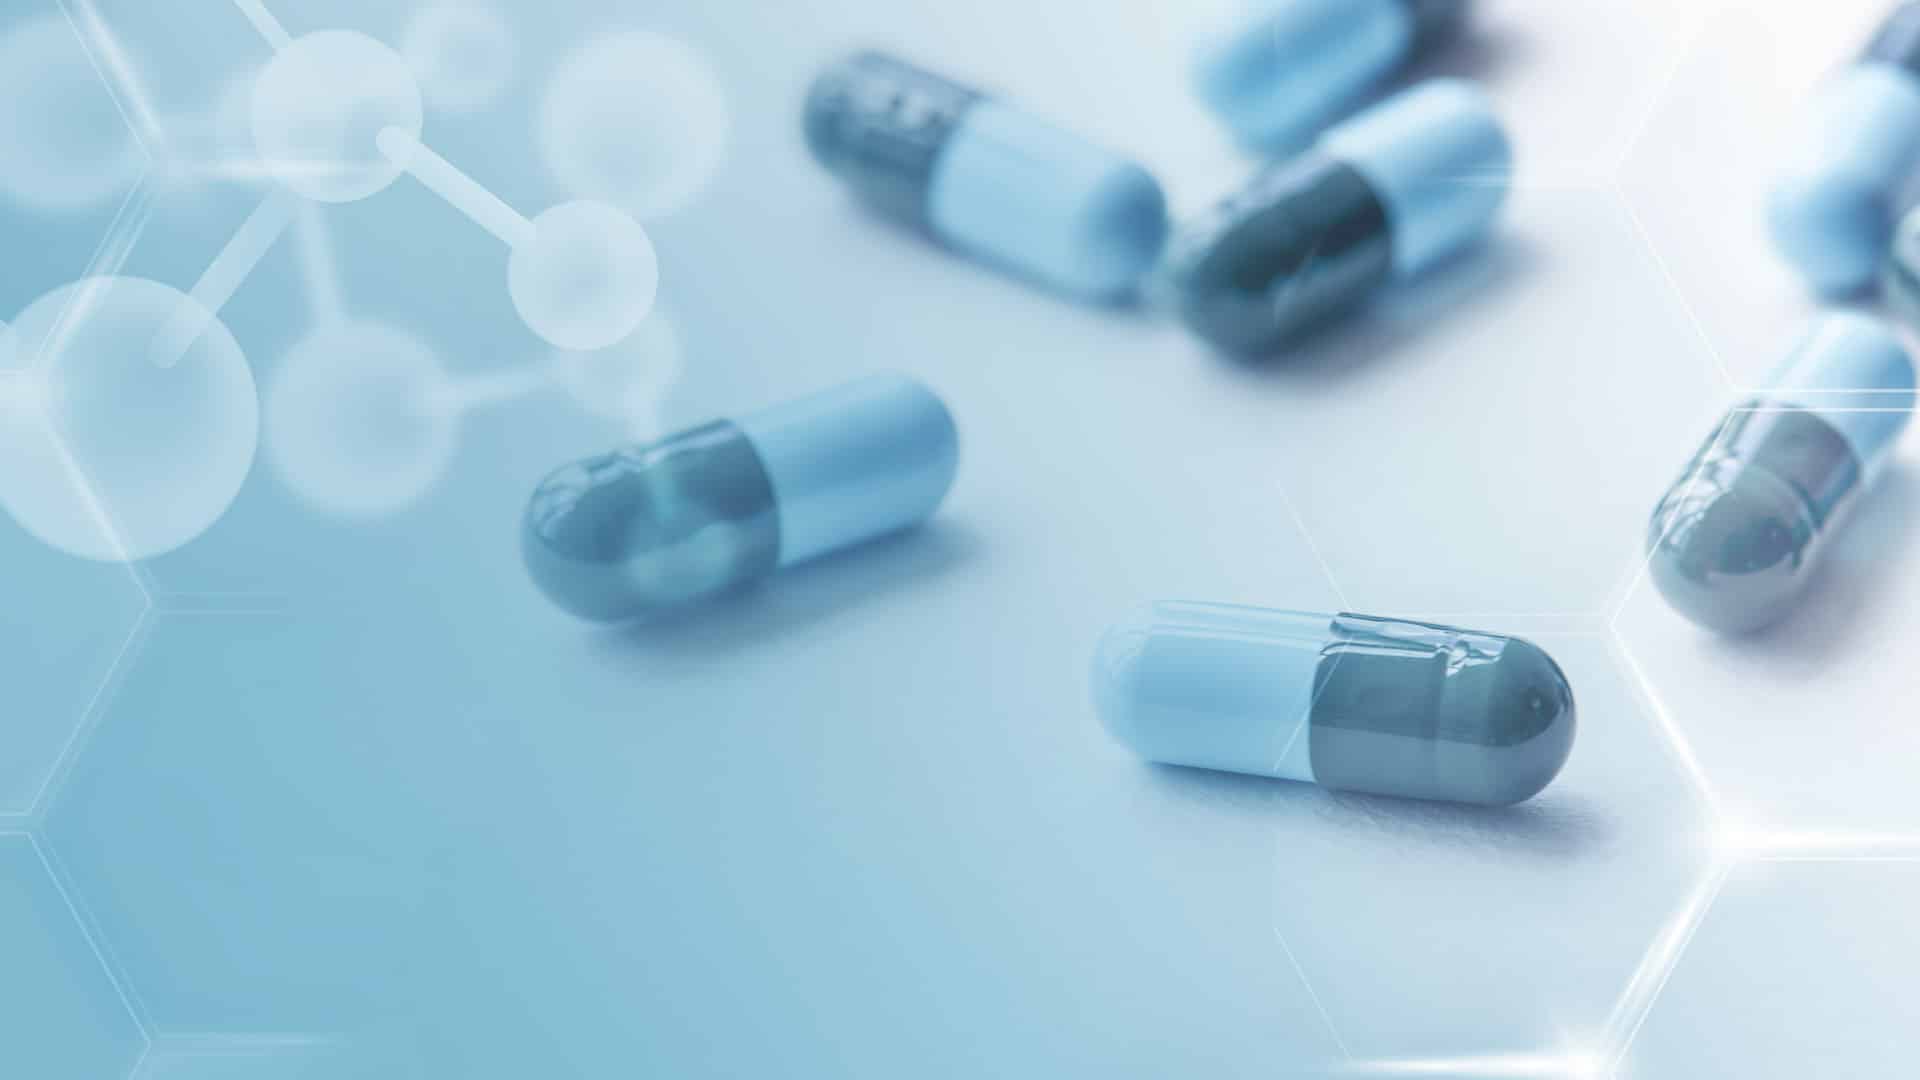 Amebic gets USFDA nod for generic cancer treatment medication